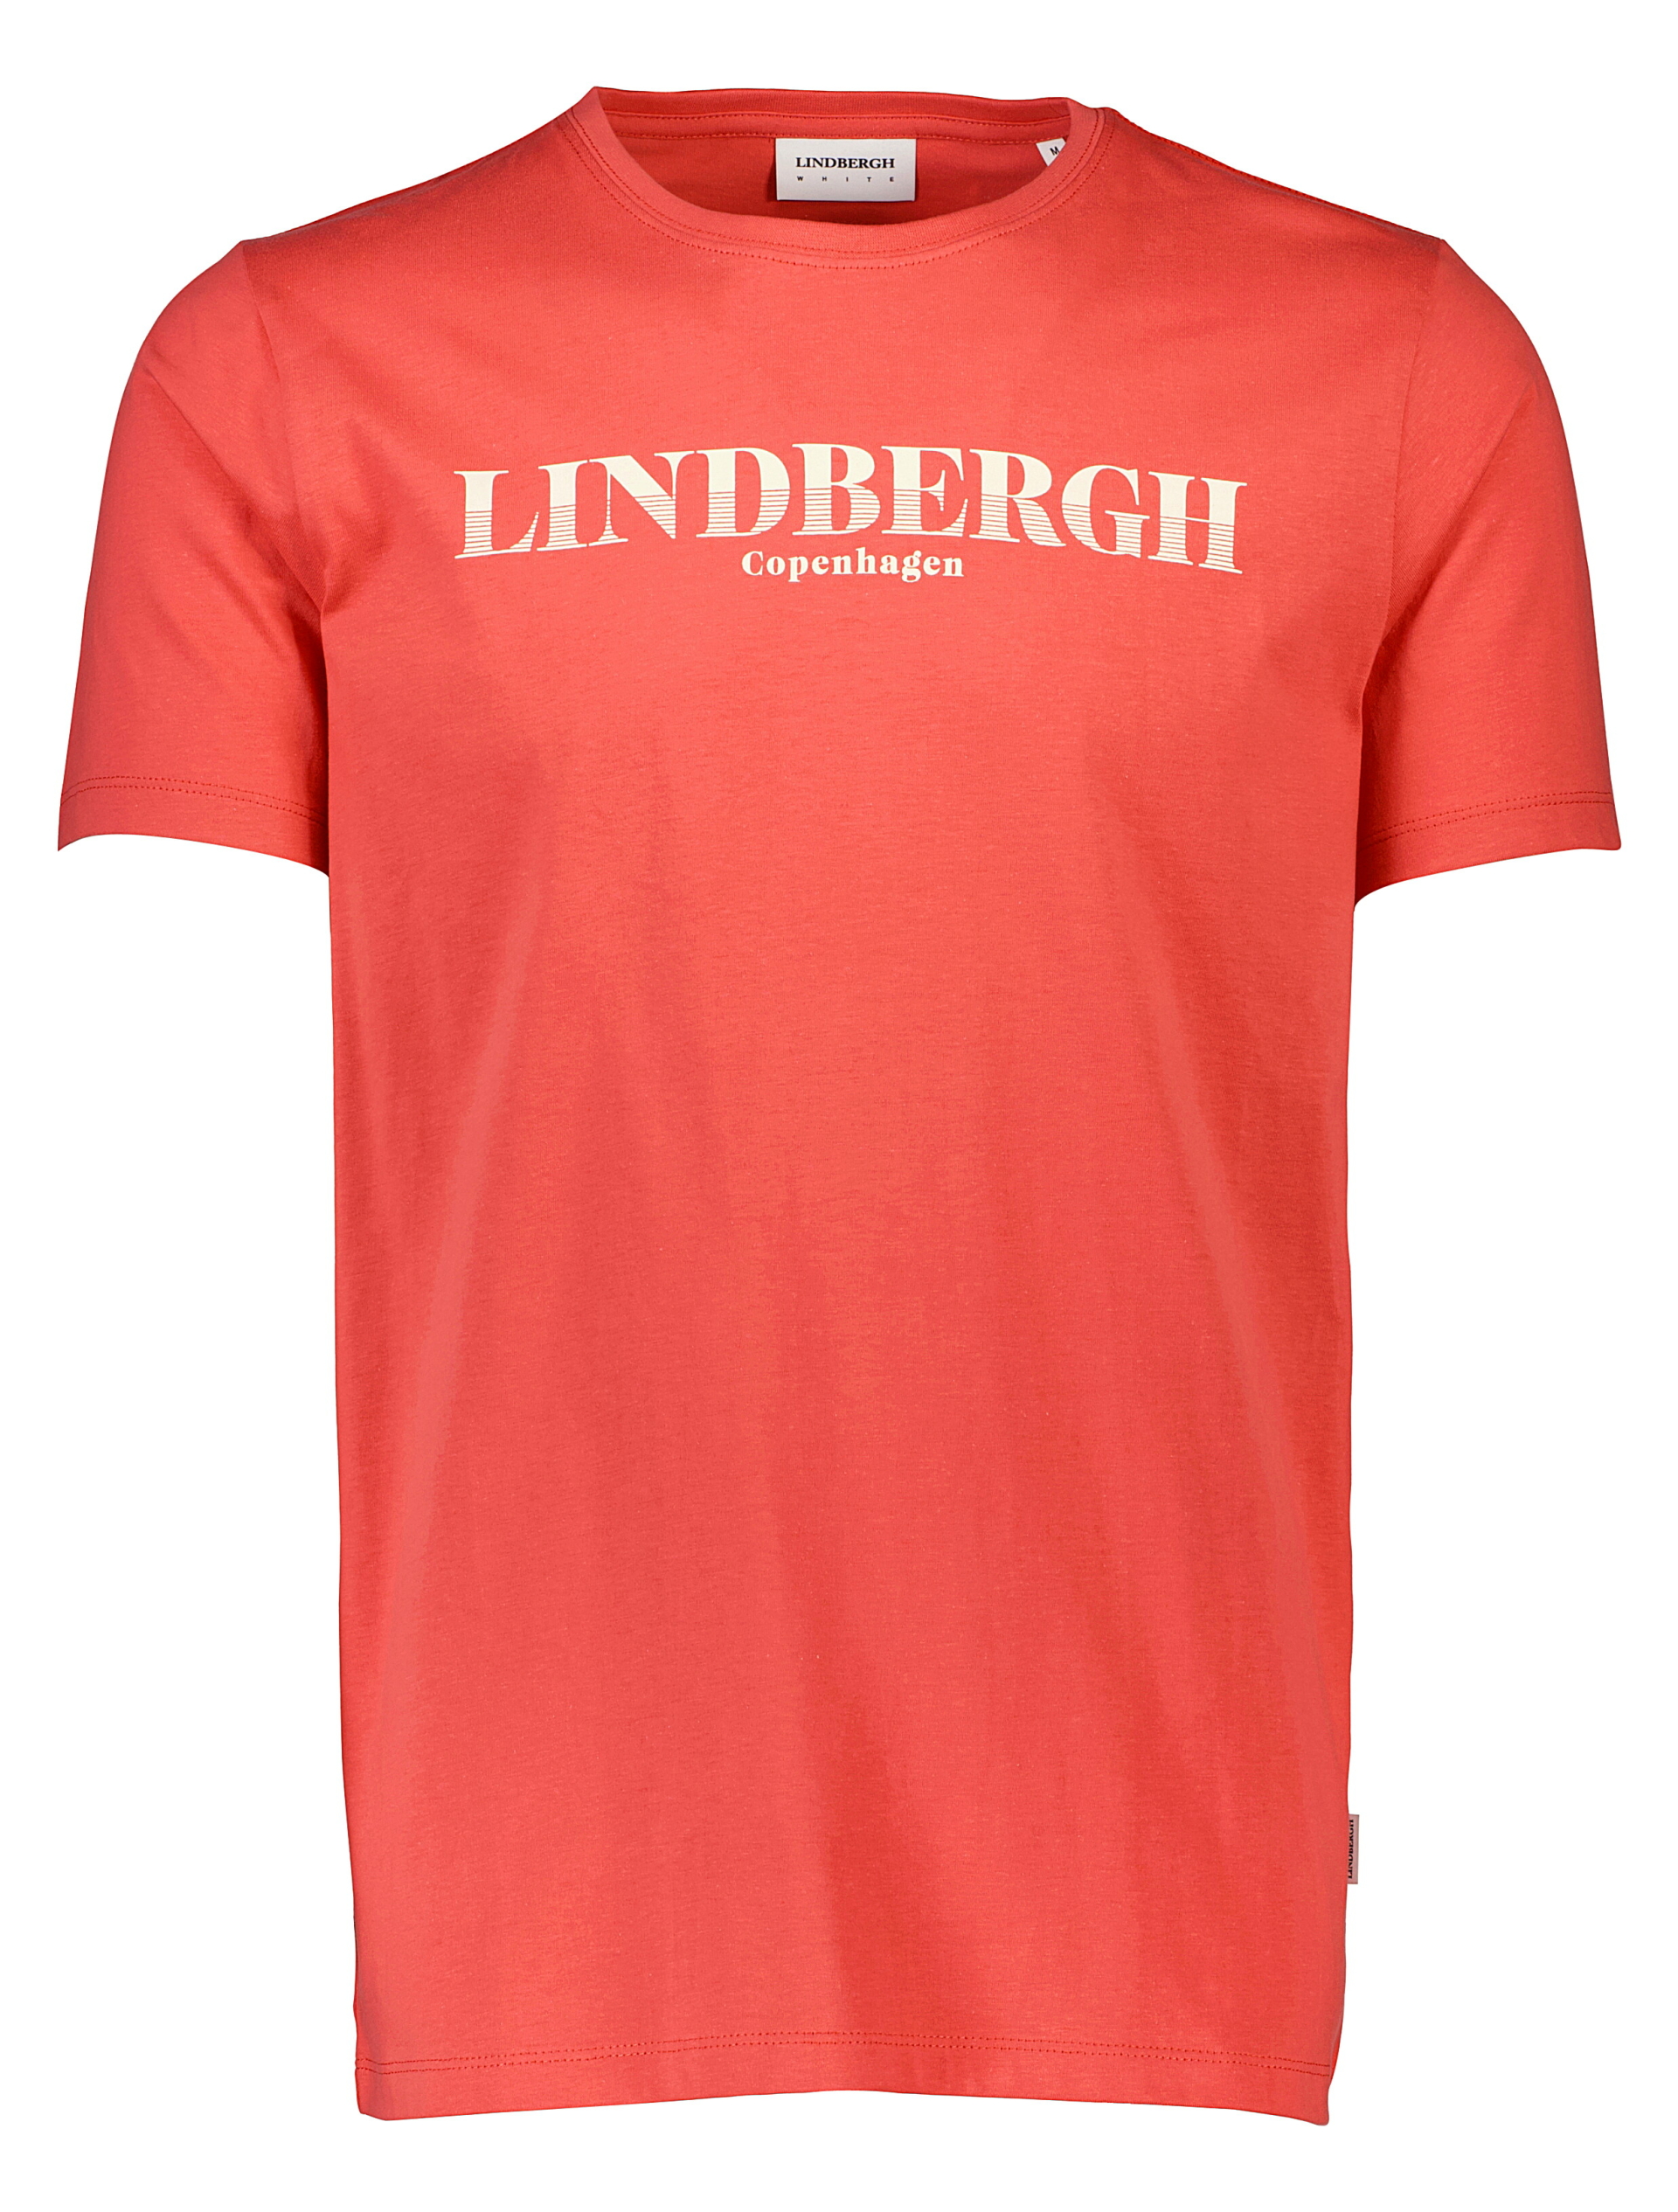 Lindbergh Tee red / coral red